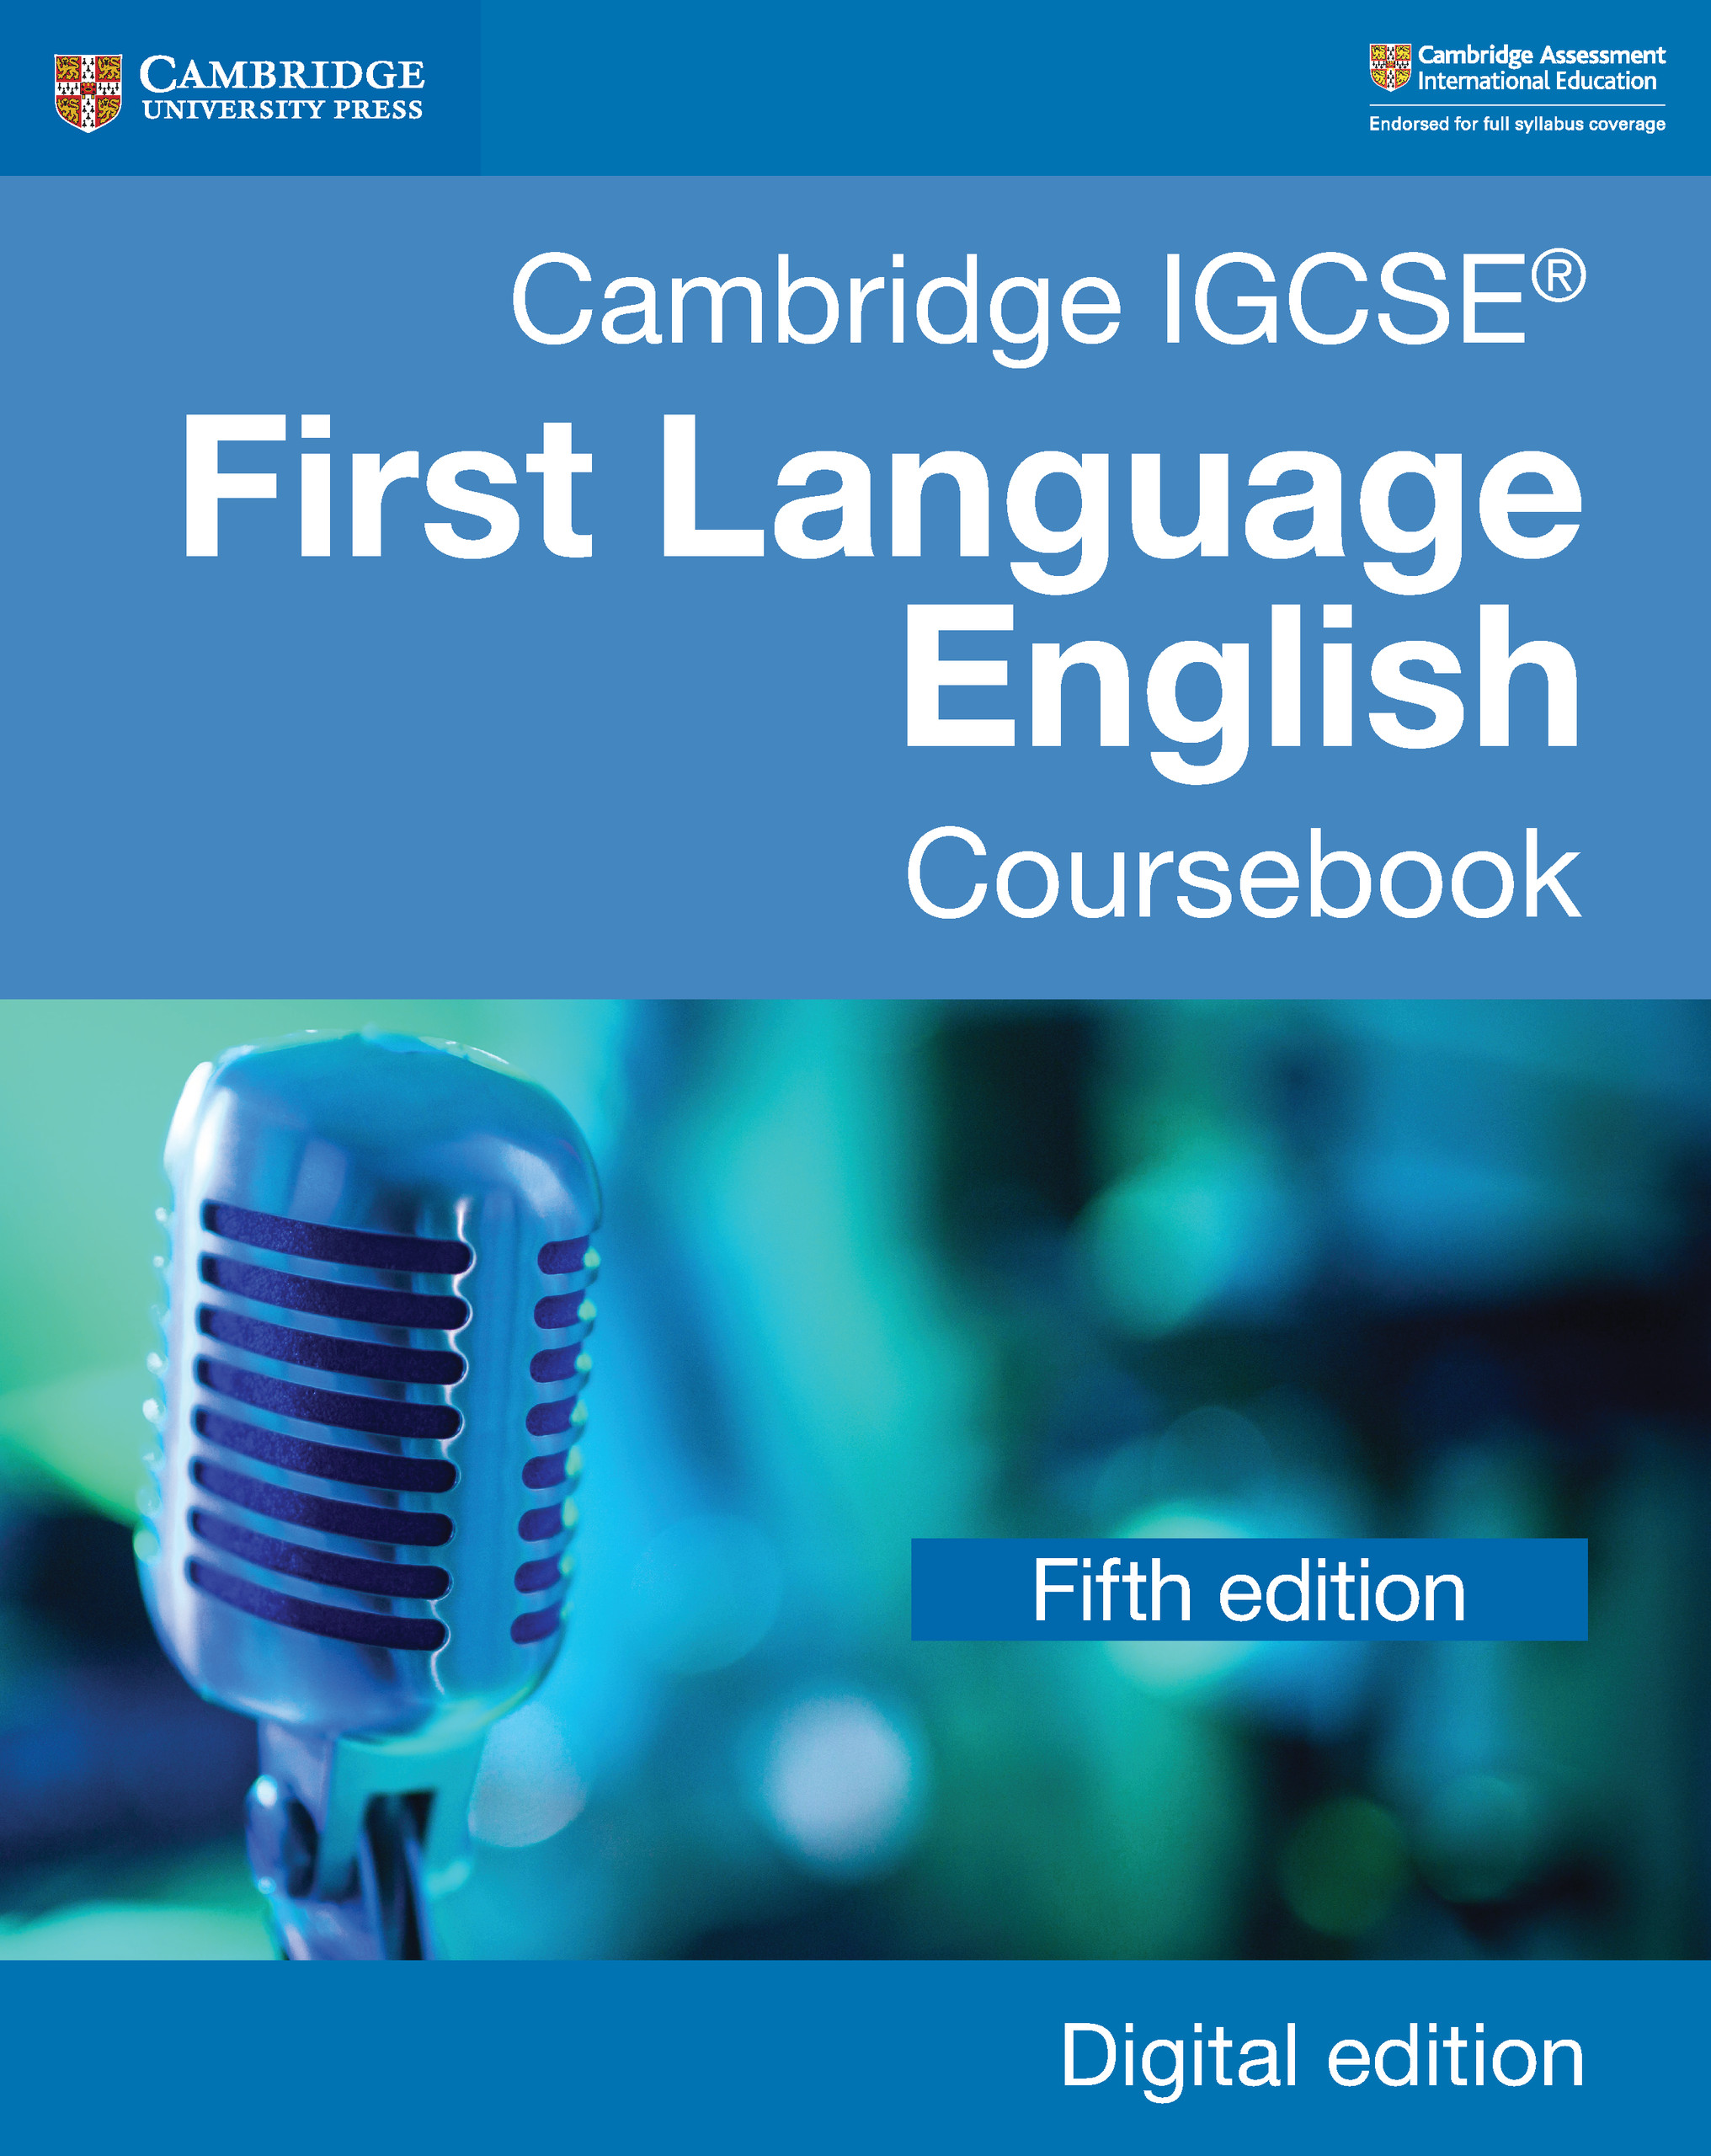 pdf-ebook-cambridge-igcse-first-language-english-coursebook-digital-revision-notes-vrogue